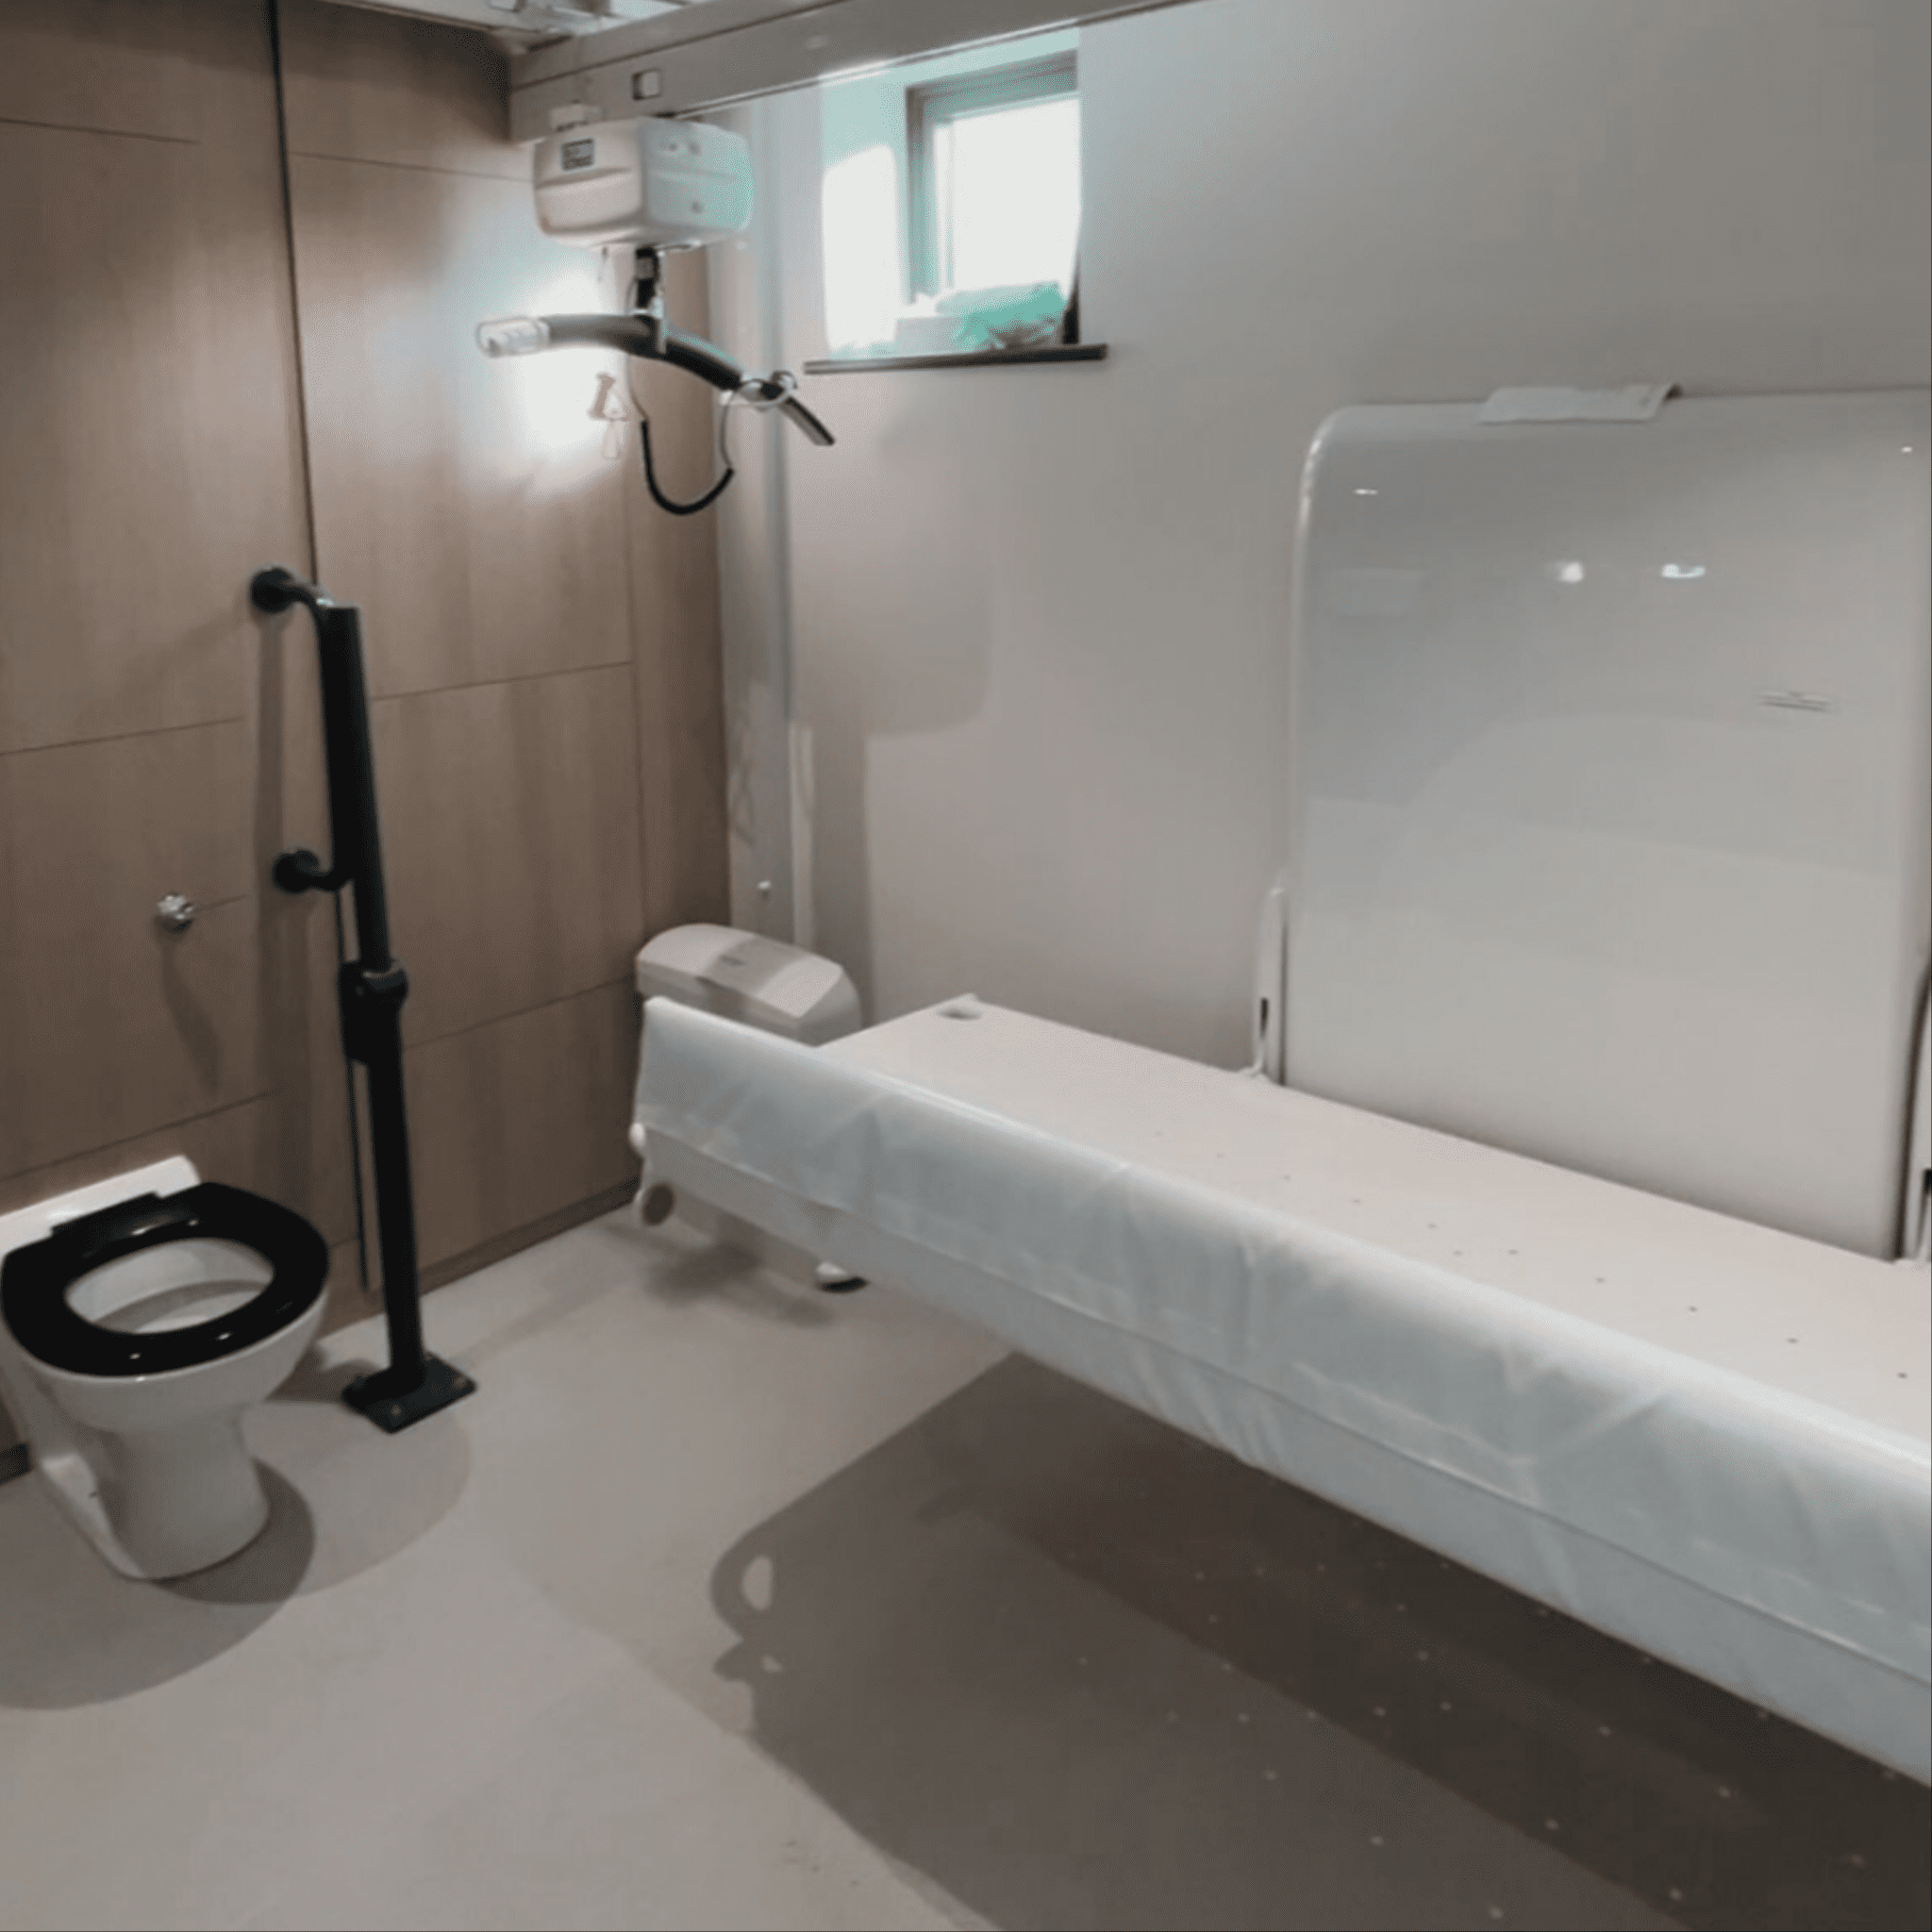 Hygiene Rooms In Schools